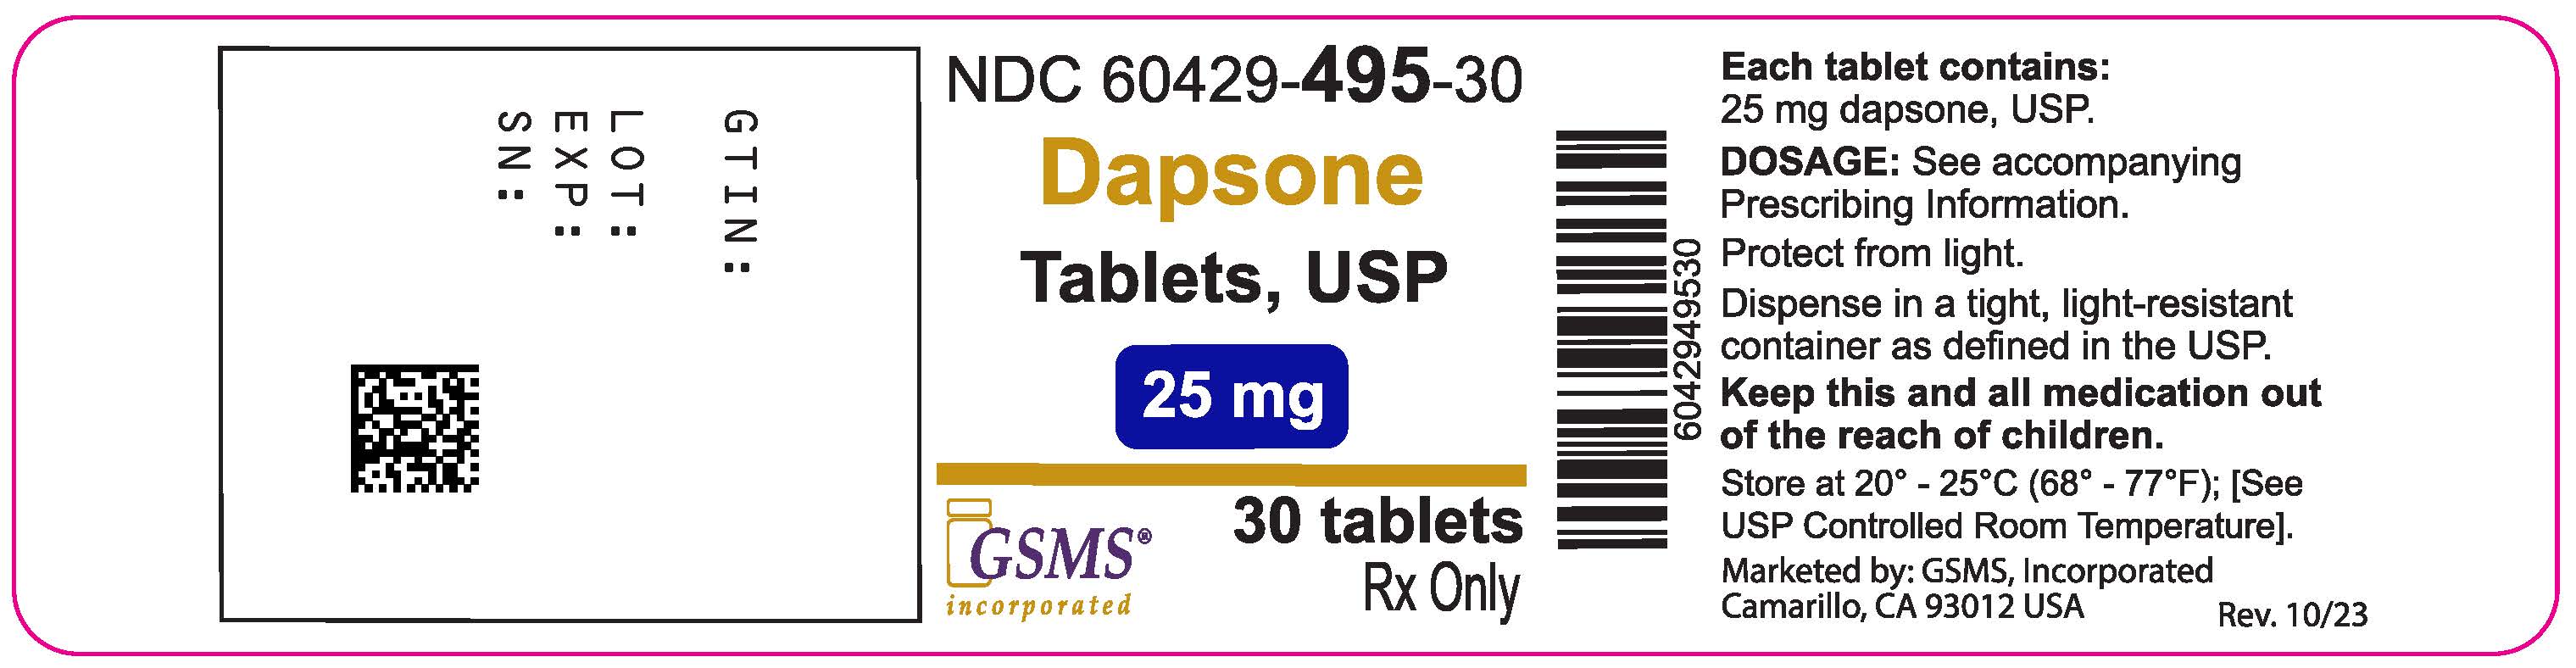 60429-495-30OL - Dapsone Tablets - Rev. 1023.jpg